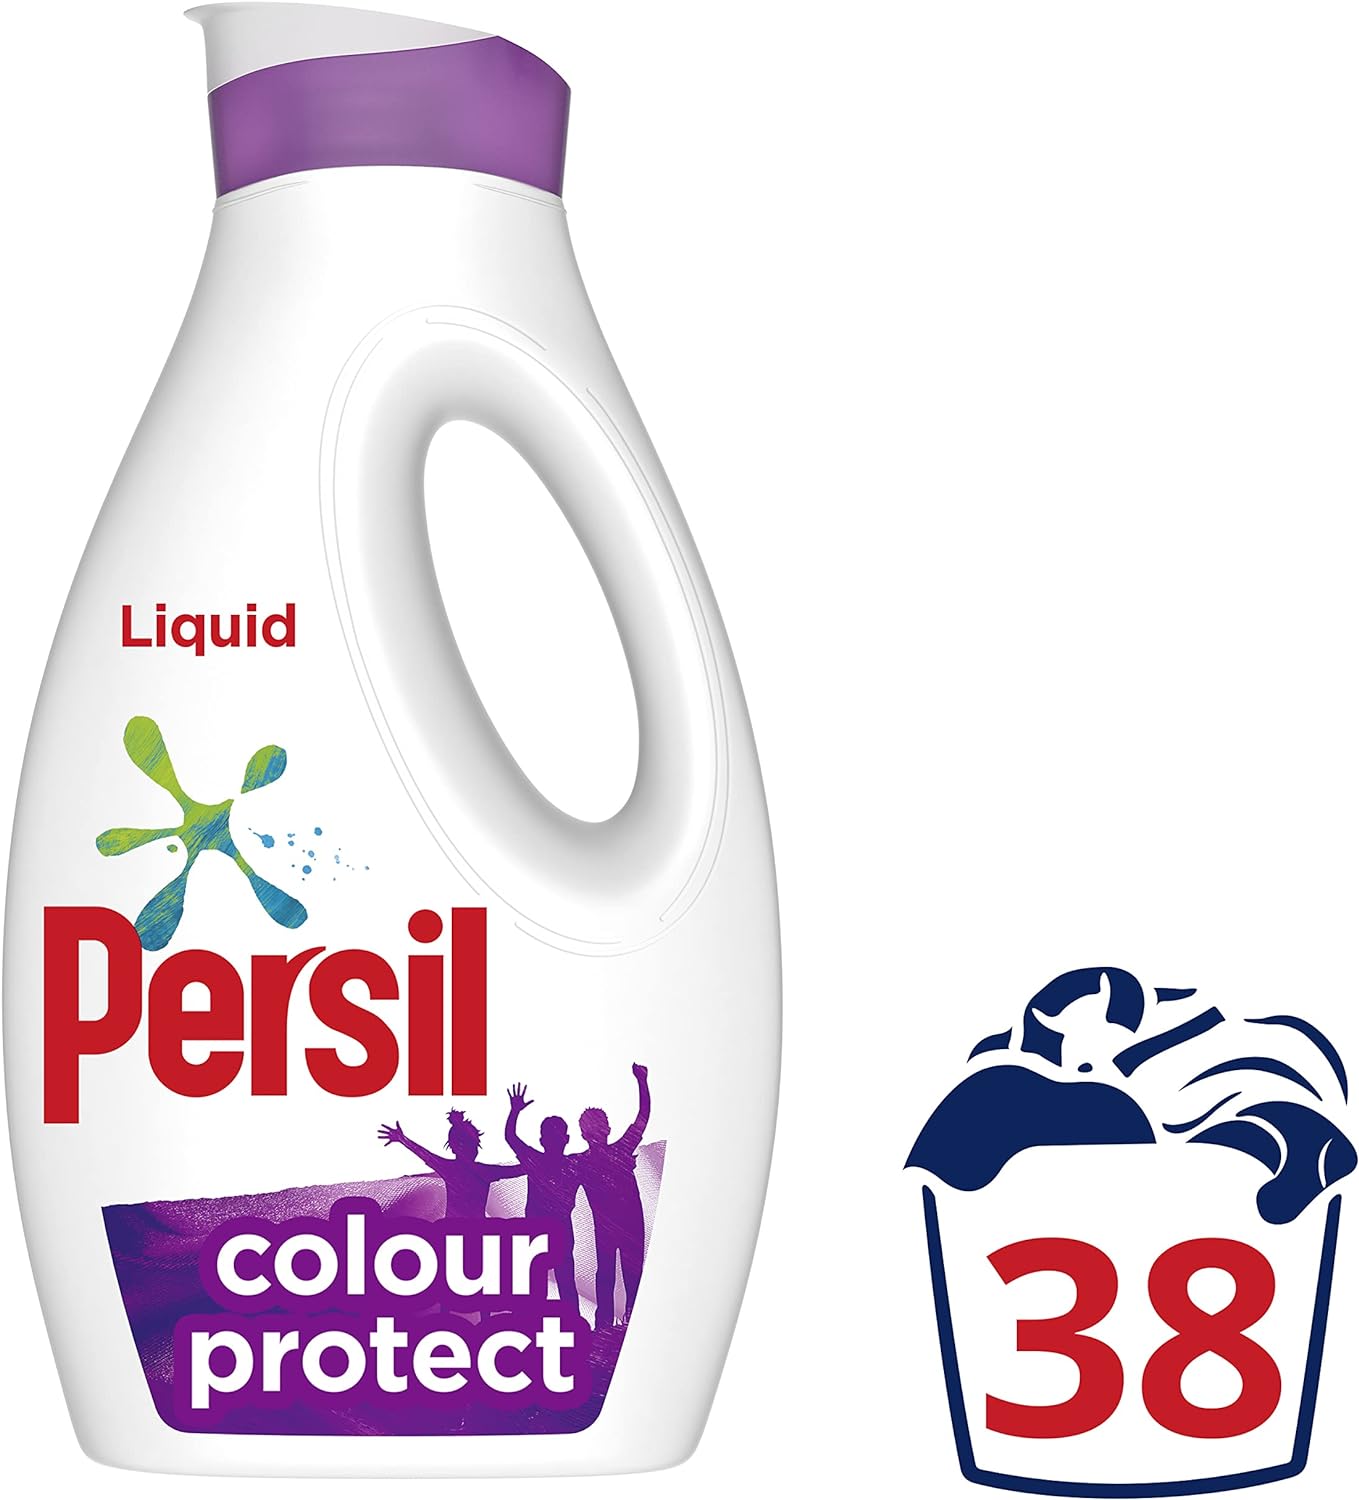 Persil Colour Laundry Washing Liquid Detergent keeps 38 wash 1.026L 6333